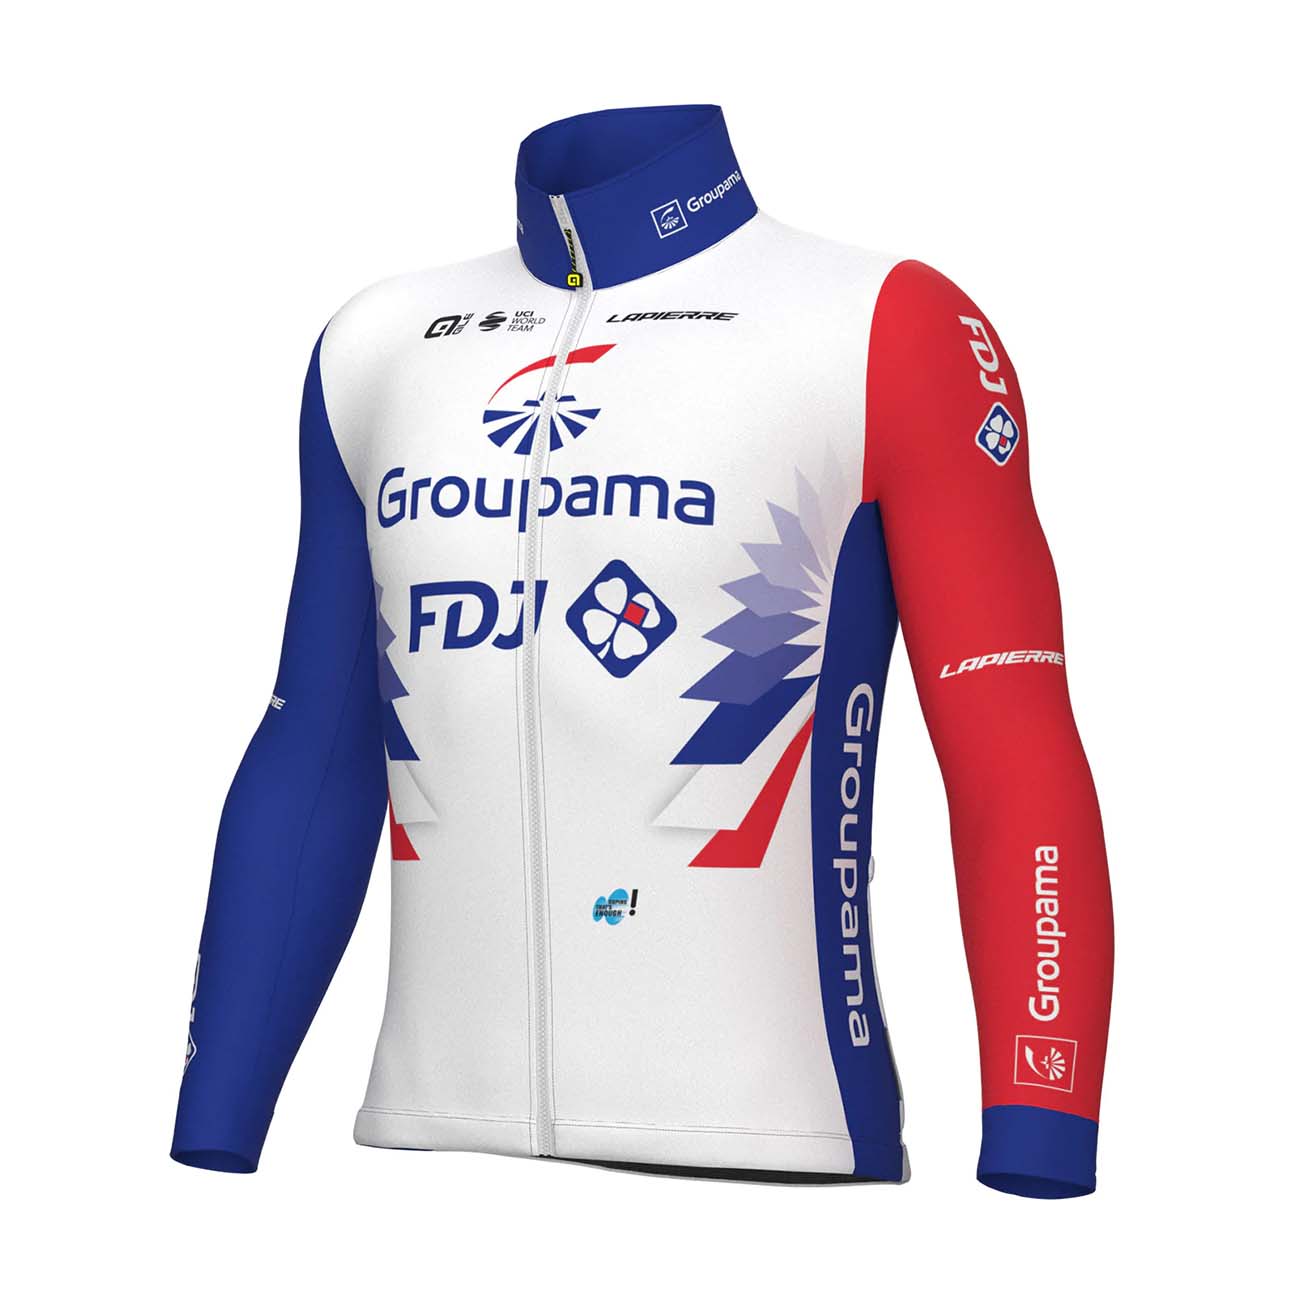 
                ALÉ Cyklistická zateplená bunda - GROUPAMA FDJ 2022 - červená/modrá/bílá
            